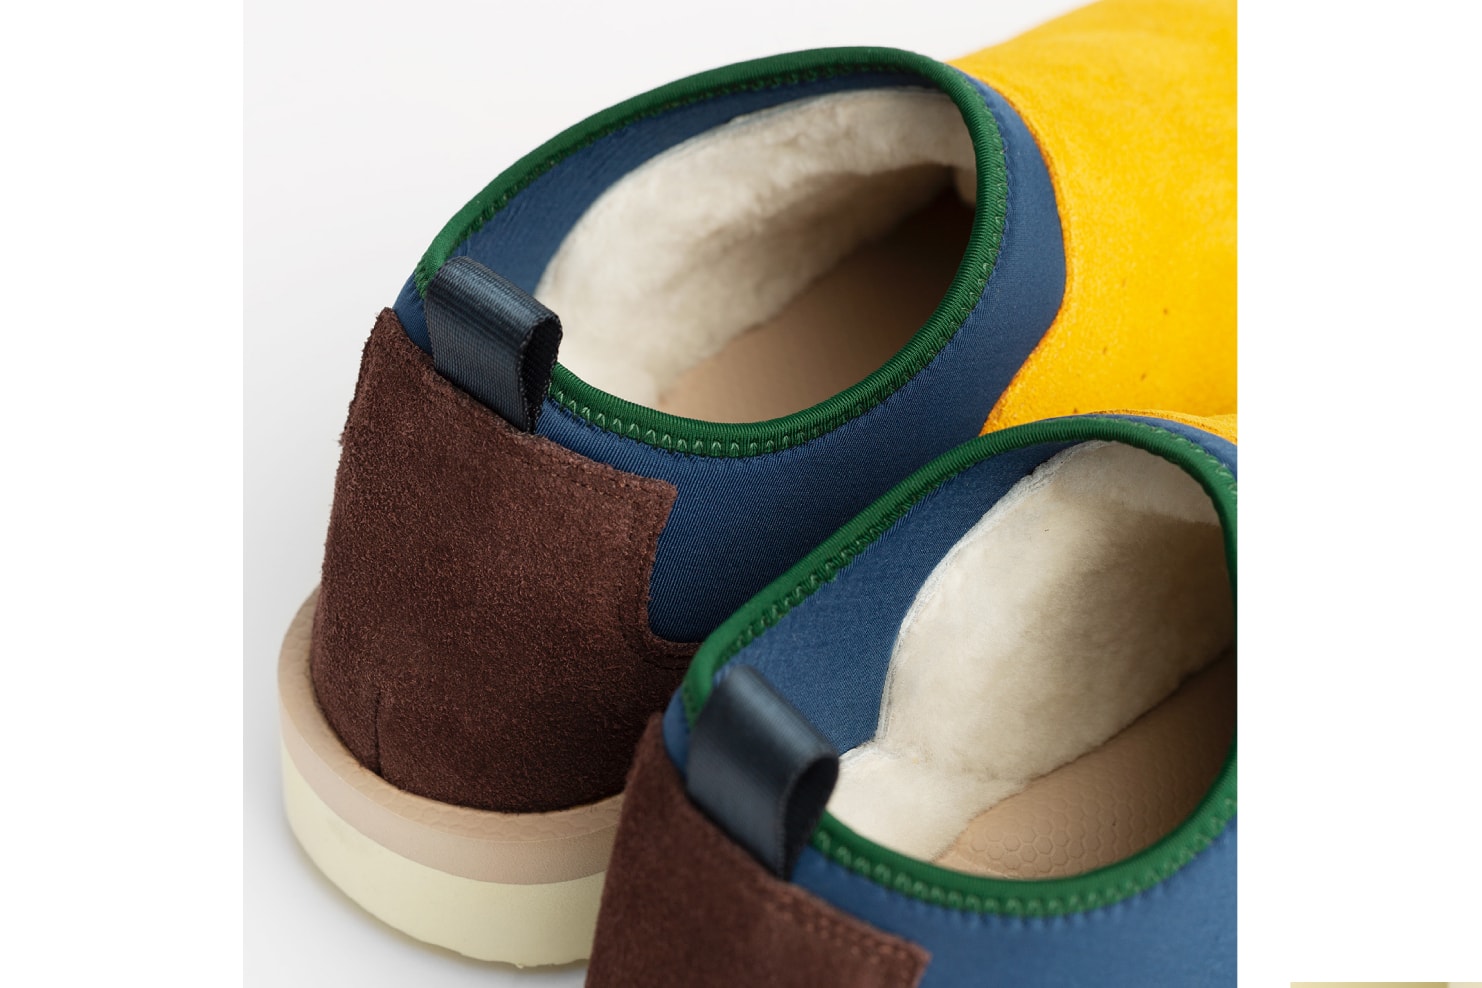 Aimé Leon Dore suicoke sandals pavo shearling slip on fall winter 2018 collaboration drop release date info sneaker shoe